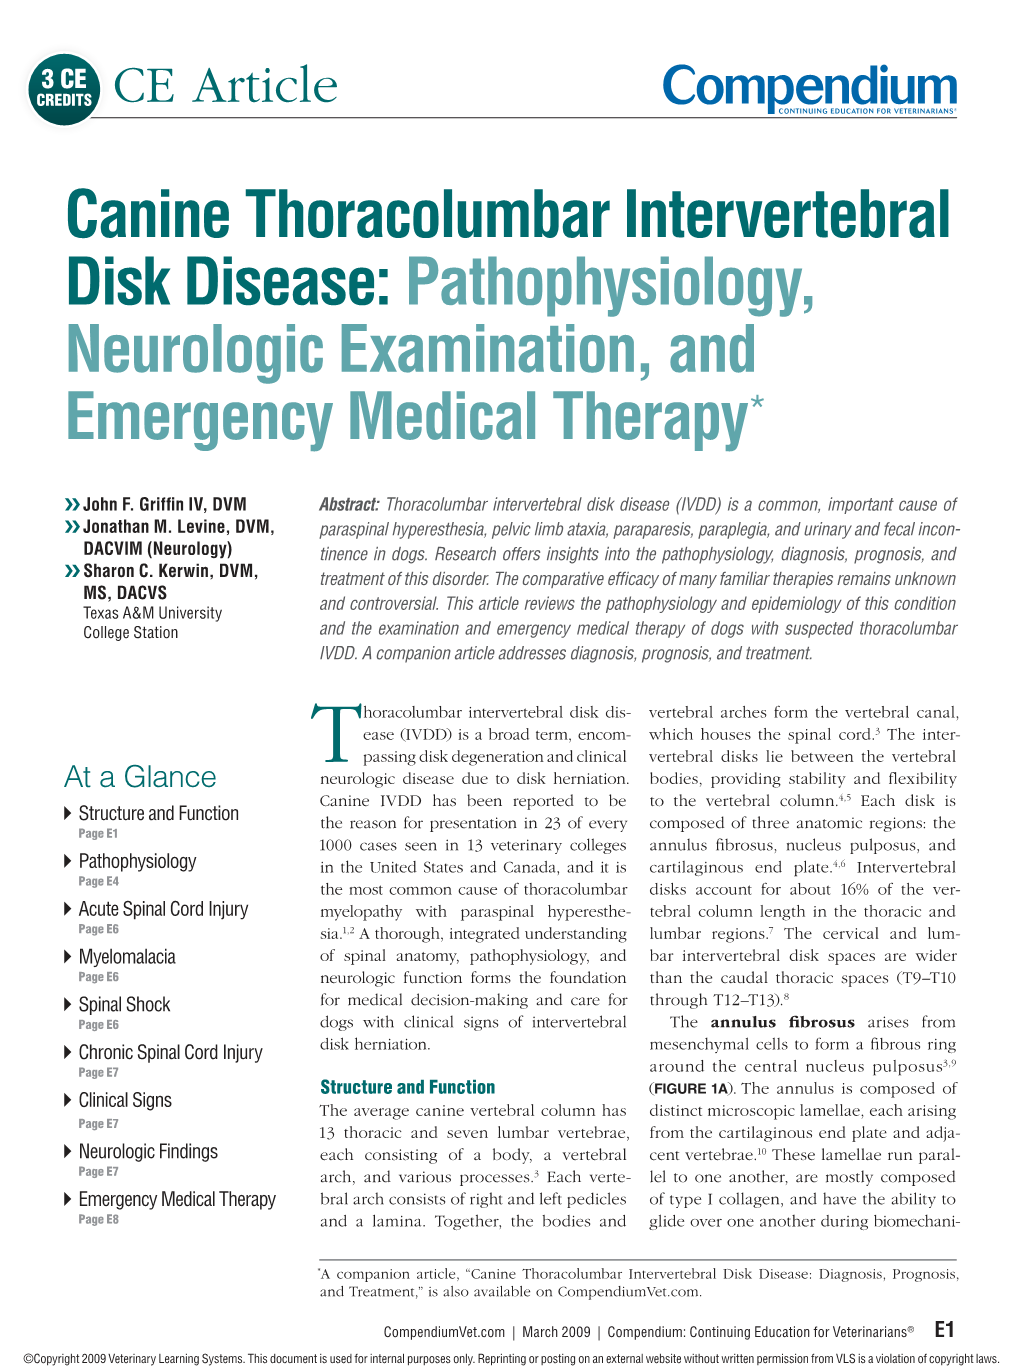 Canine Thoracolumbar Intervertebral Disk Disease: Pathophysiology, Neurologic Examination, and Emergency Medical Therapy*